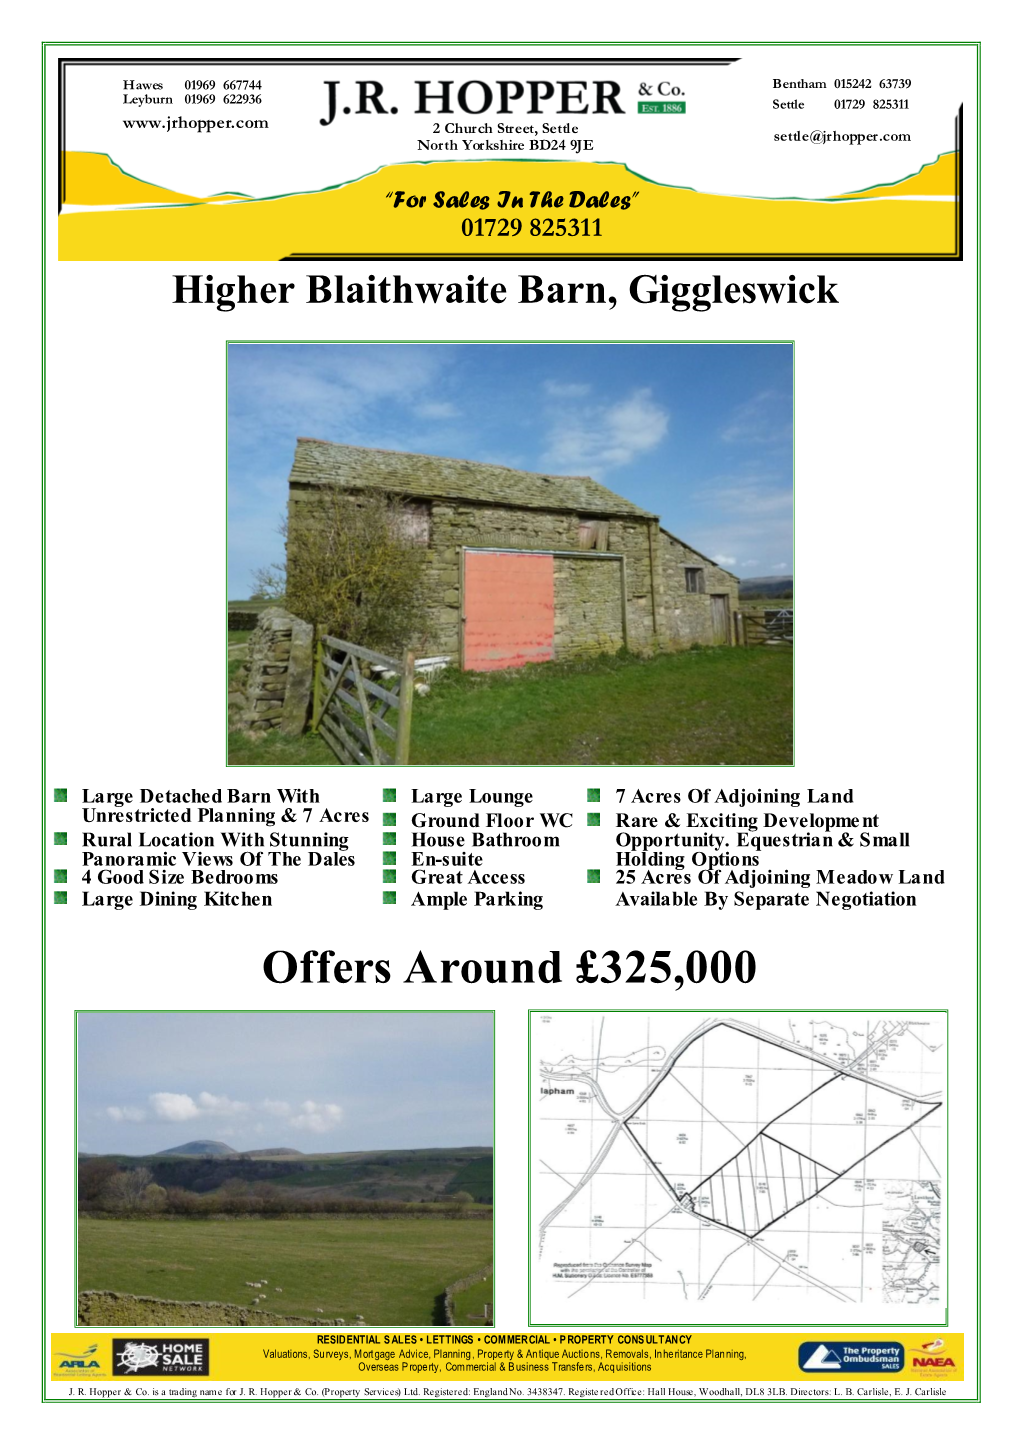 Higher Blaithwaite Barn, Giggleswick